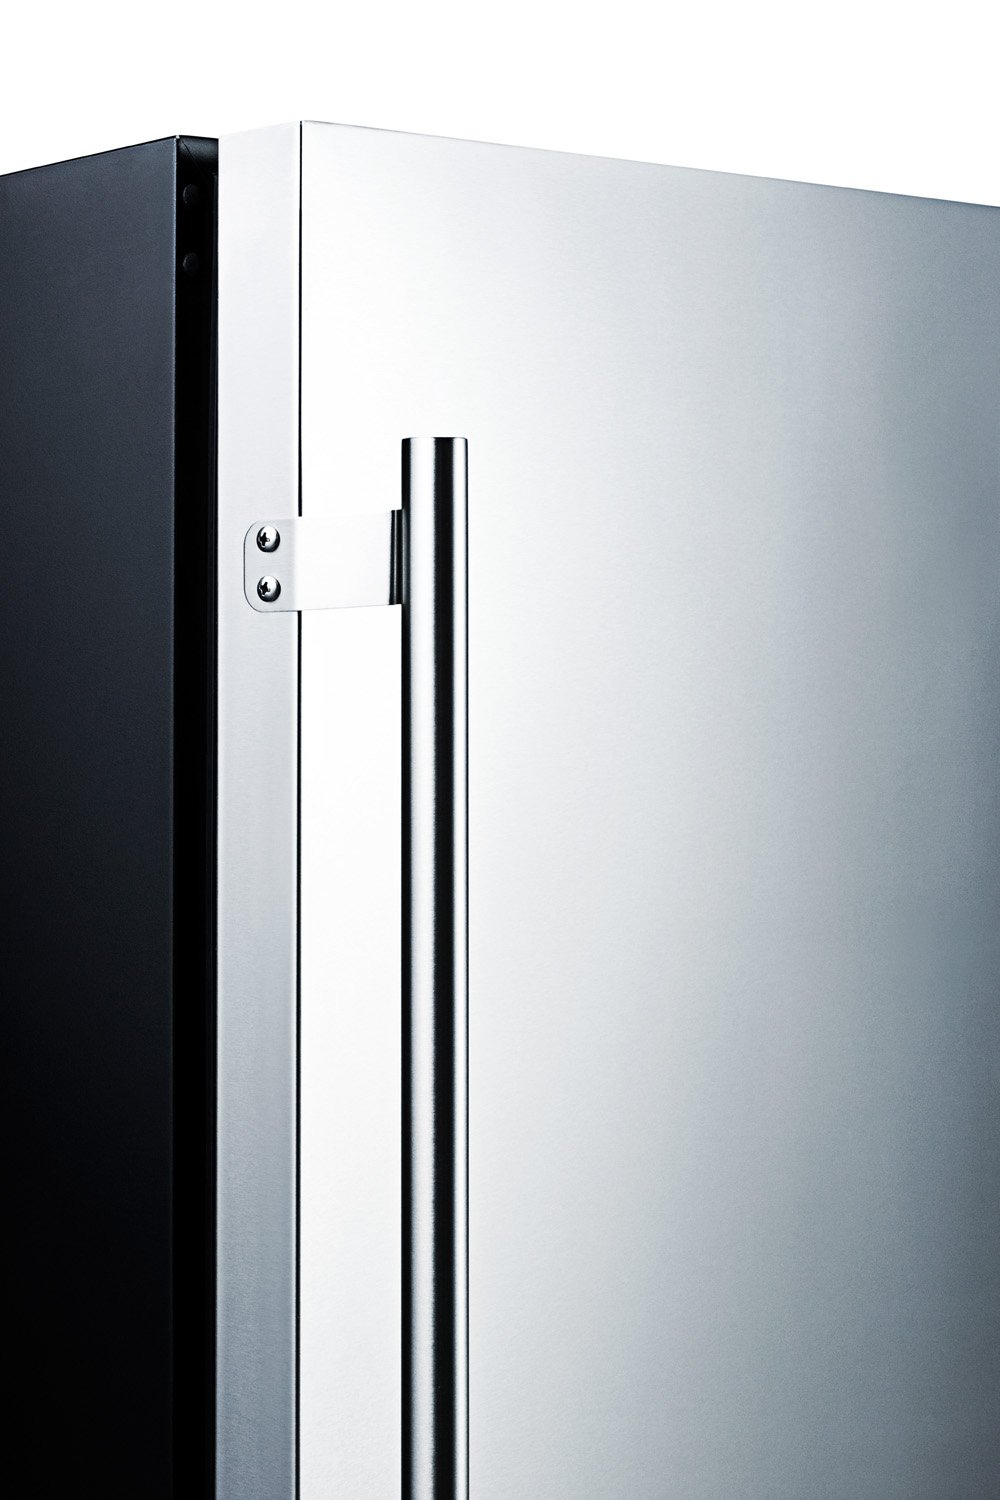 SUMMIT 24" Wide Outdoor All-Refrigerator